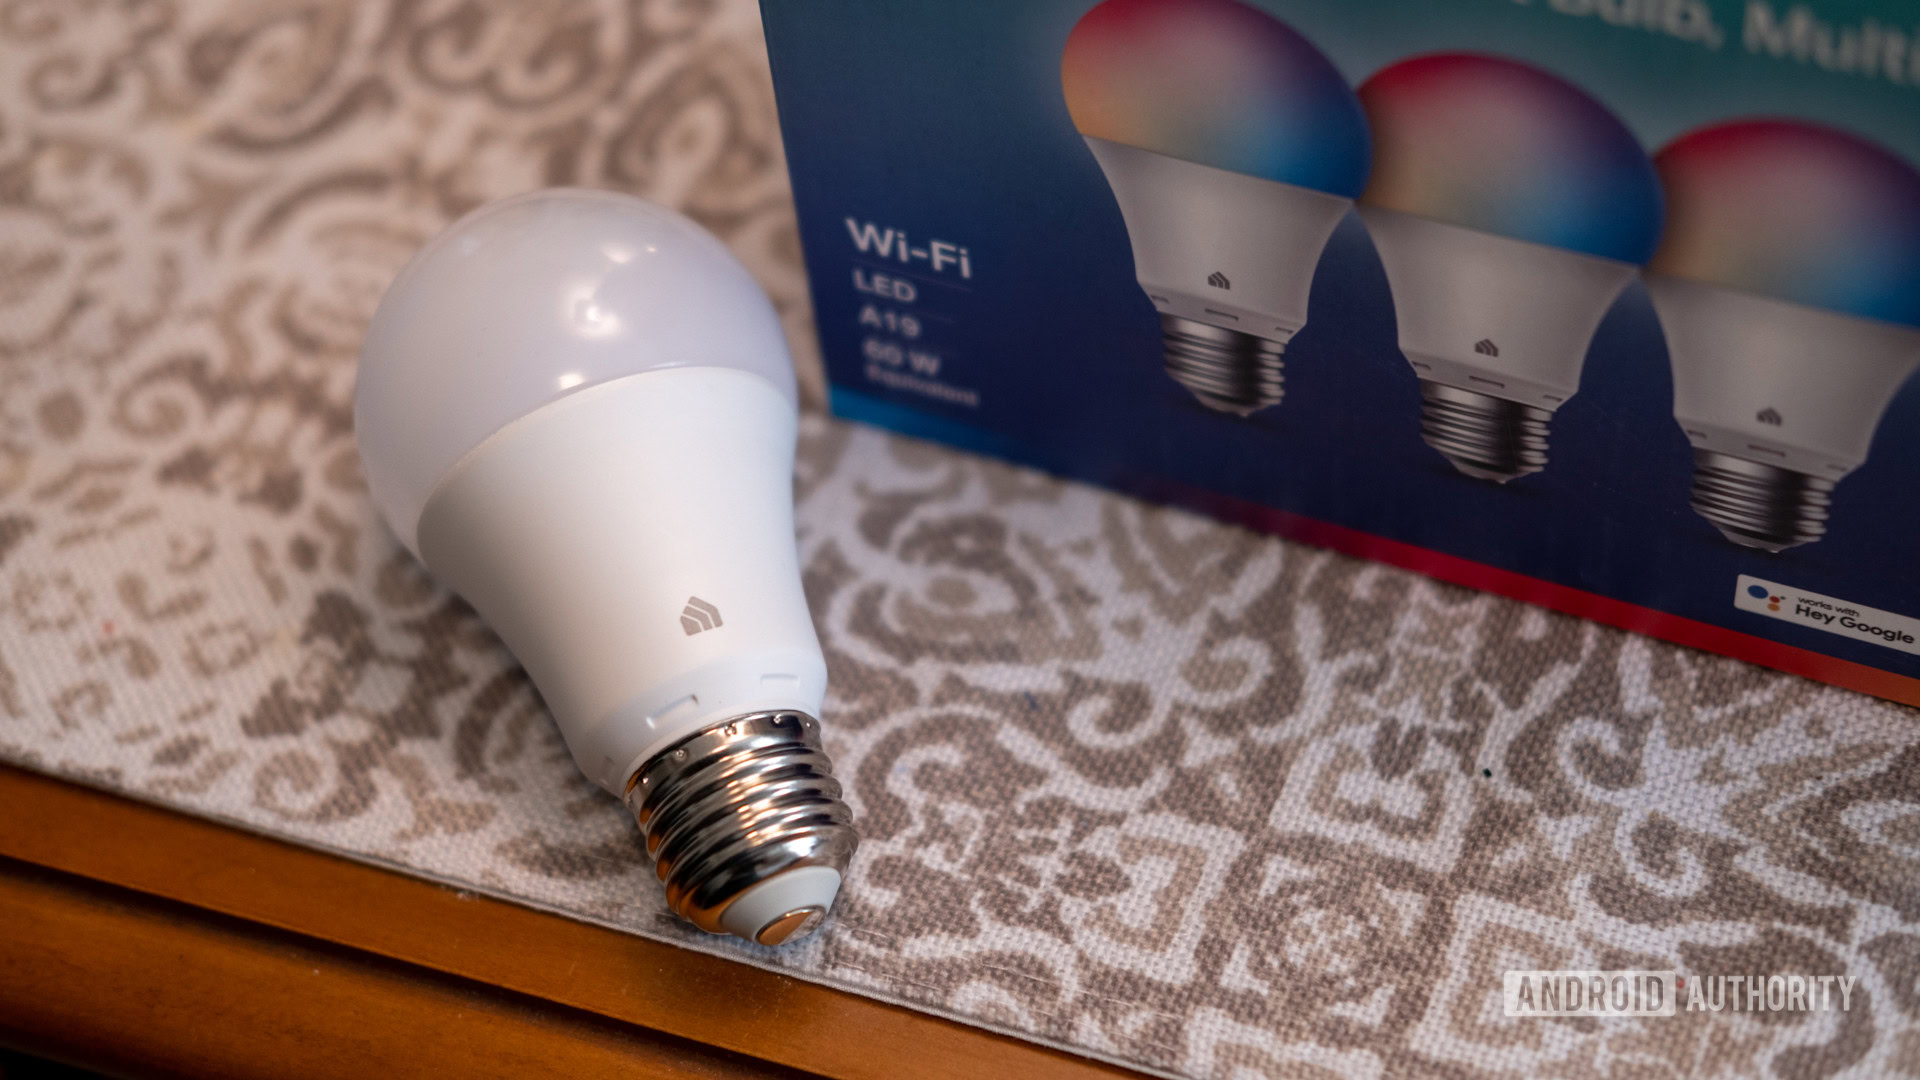  Kasa Smart Light Bulbs that works with Alexa and